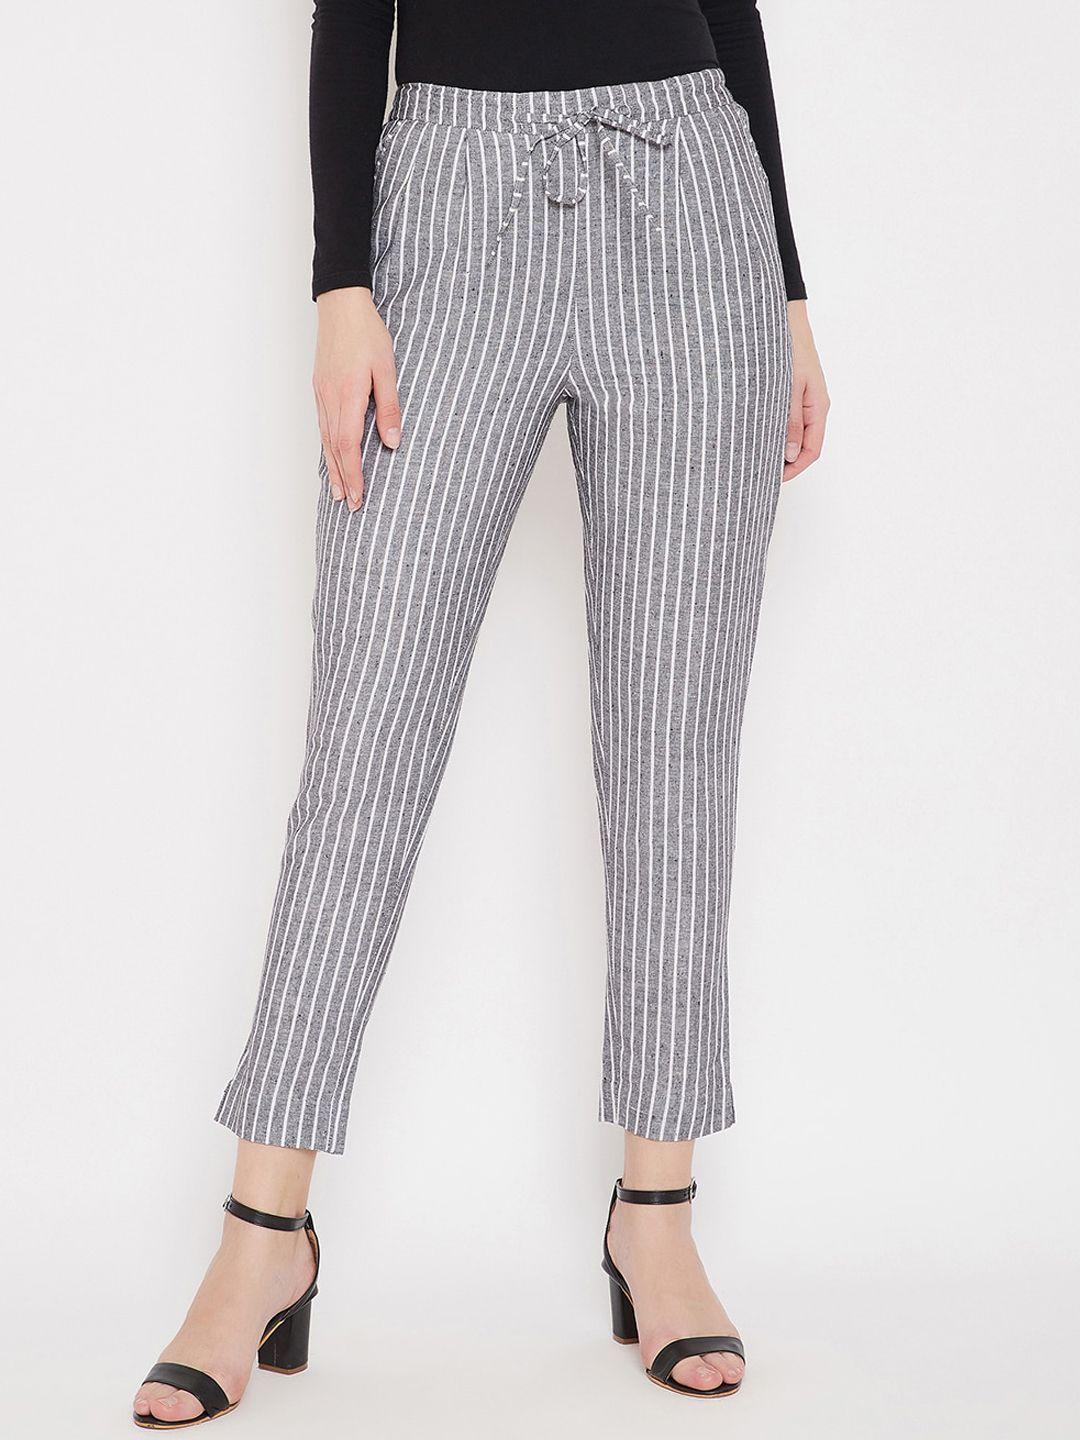 bitterlime women grey & white striped regular trousers